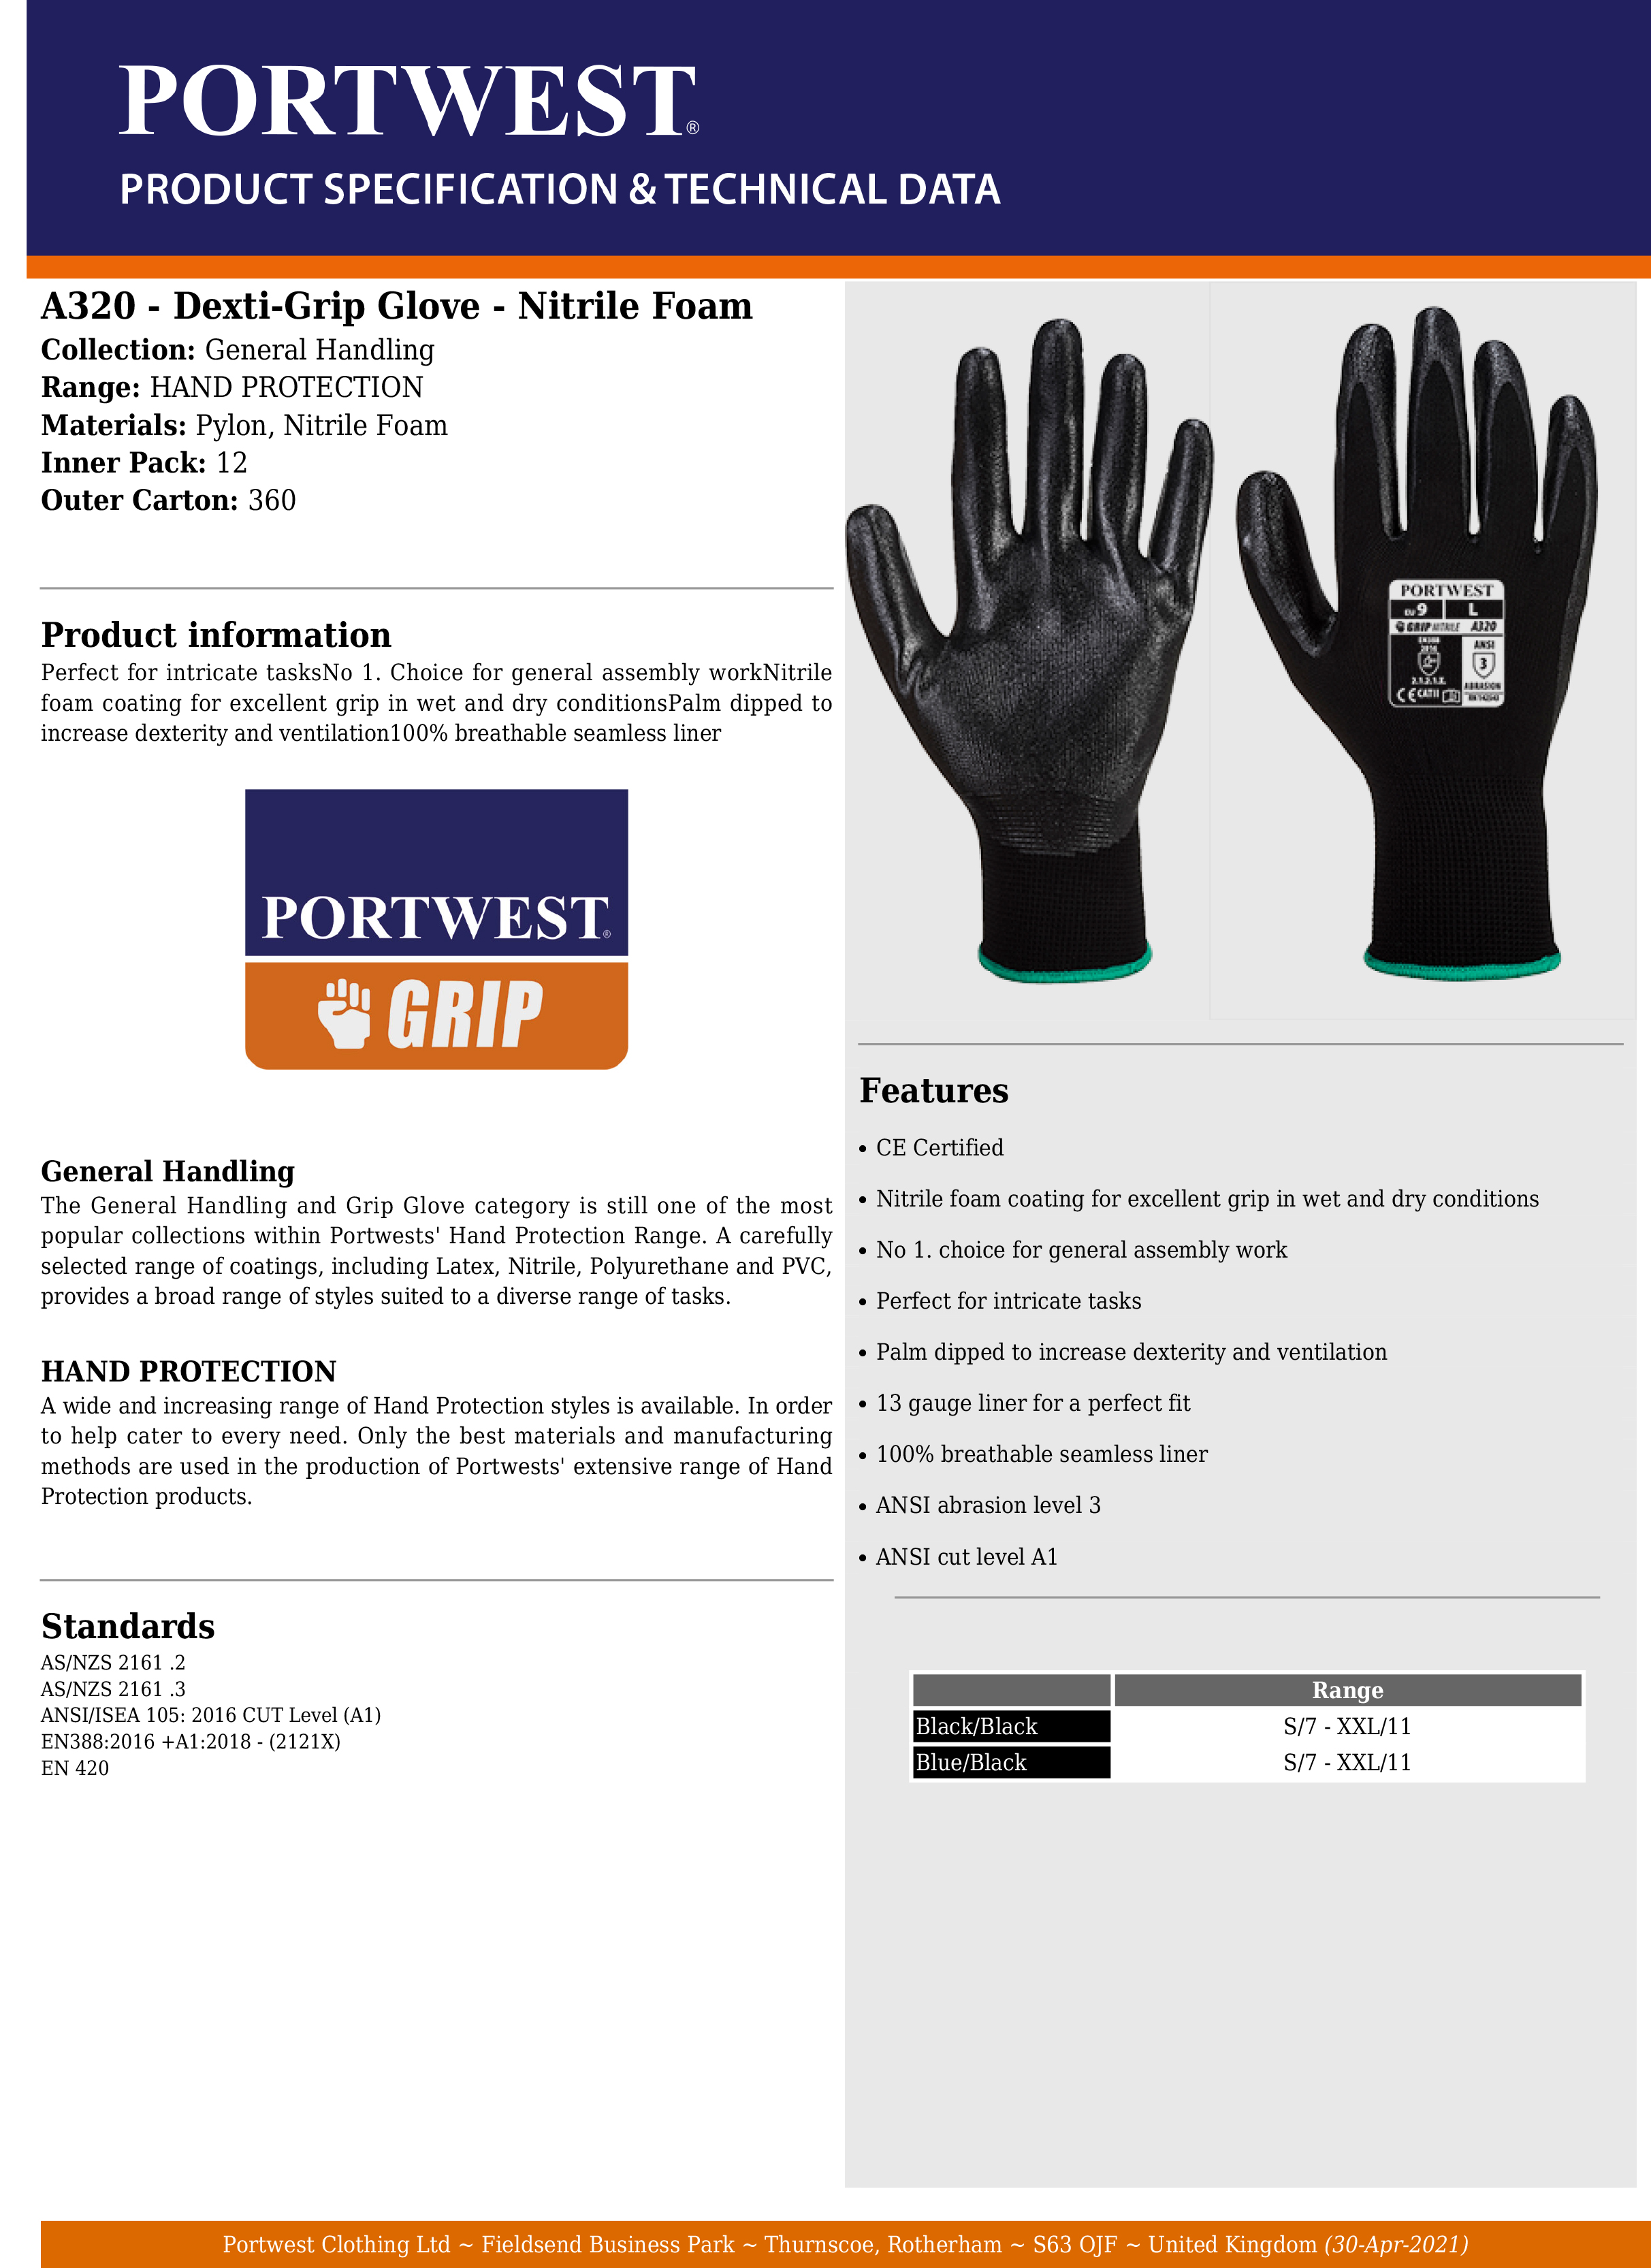 Portwest A320 Dexti-Grip Handling Work Glove with Ntrile Foam Coating Grip ANSI 